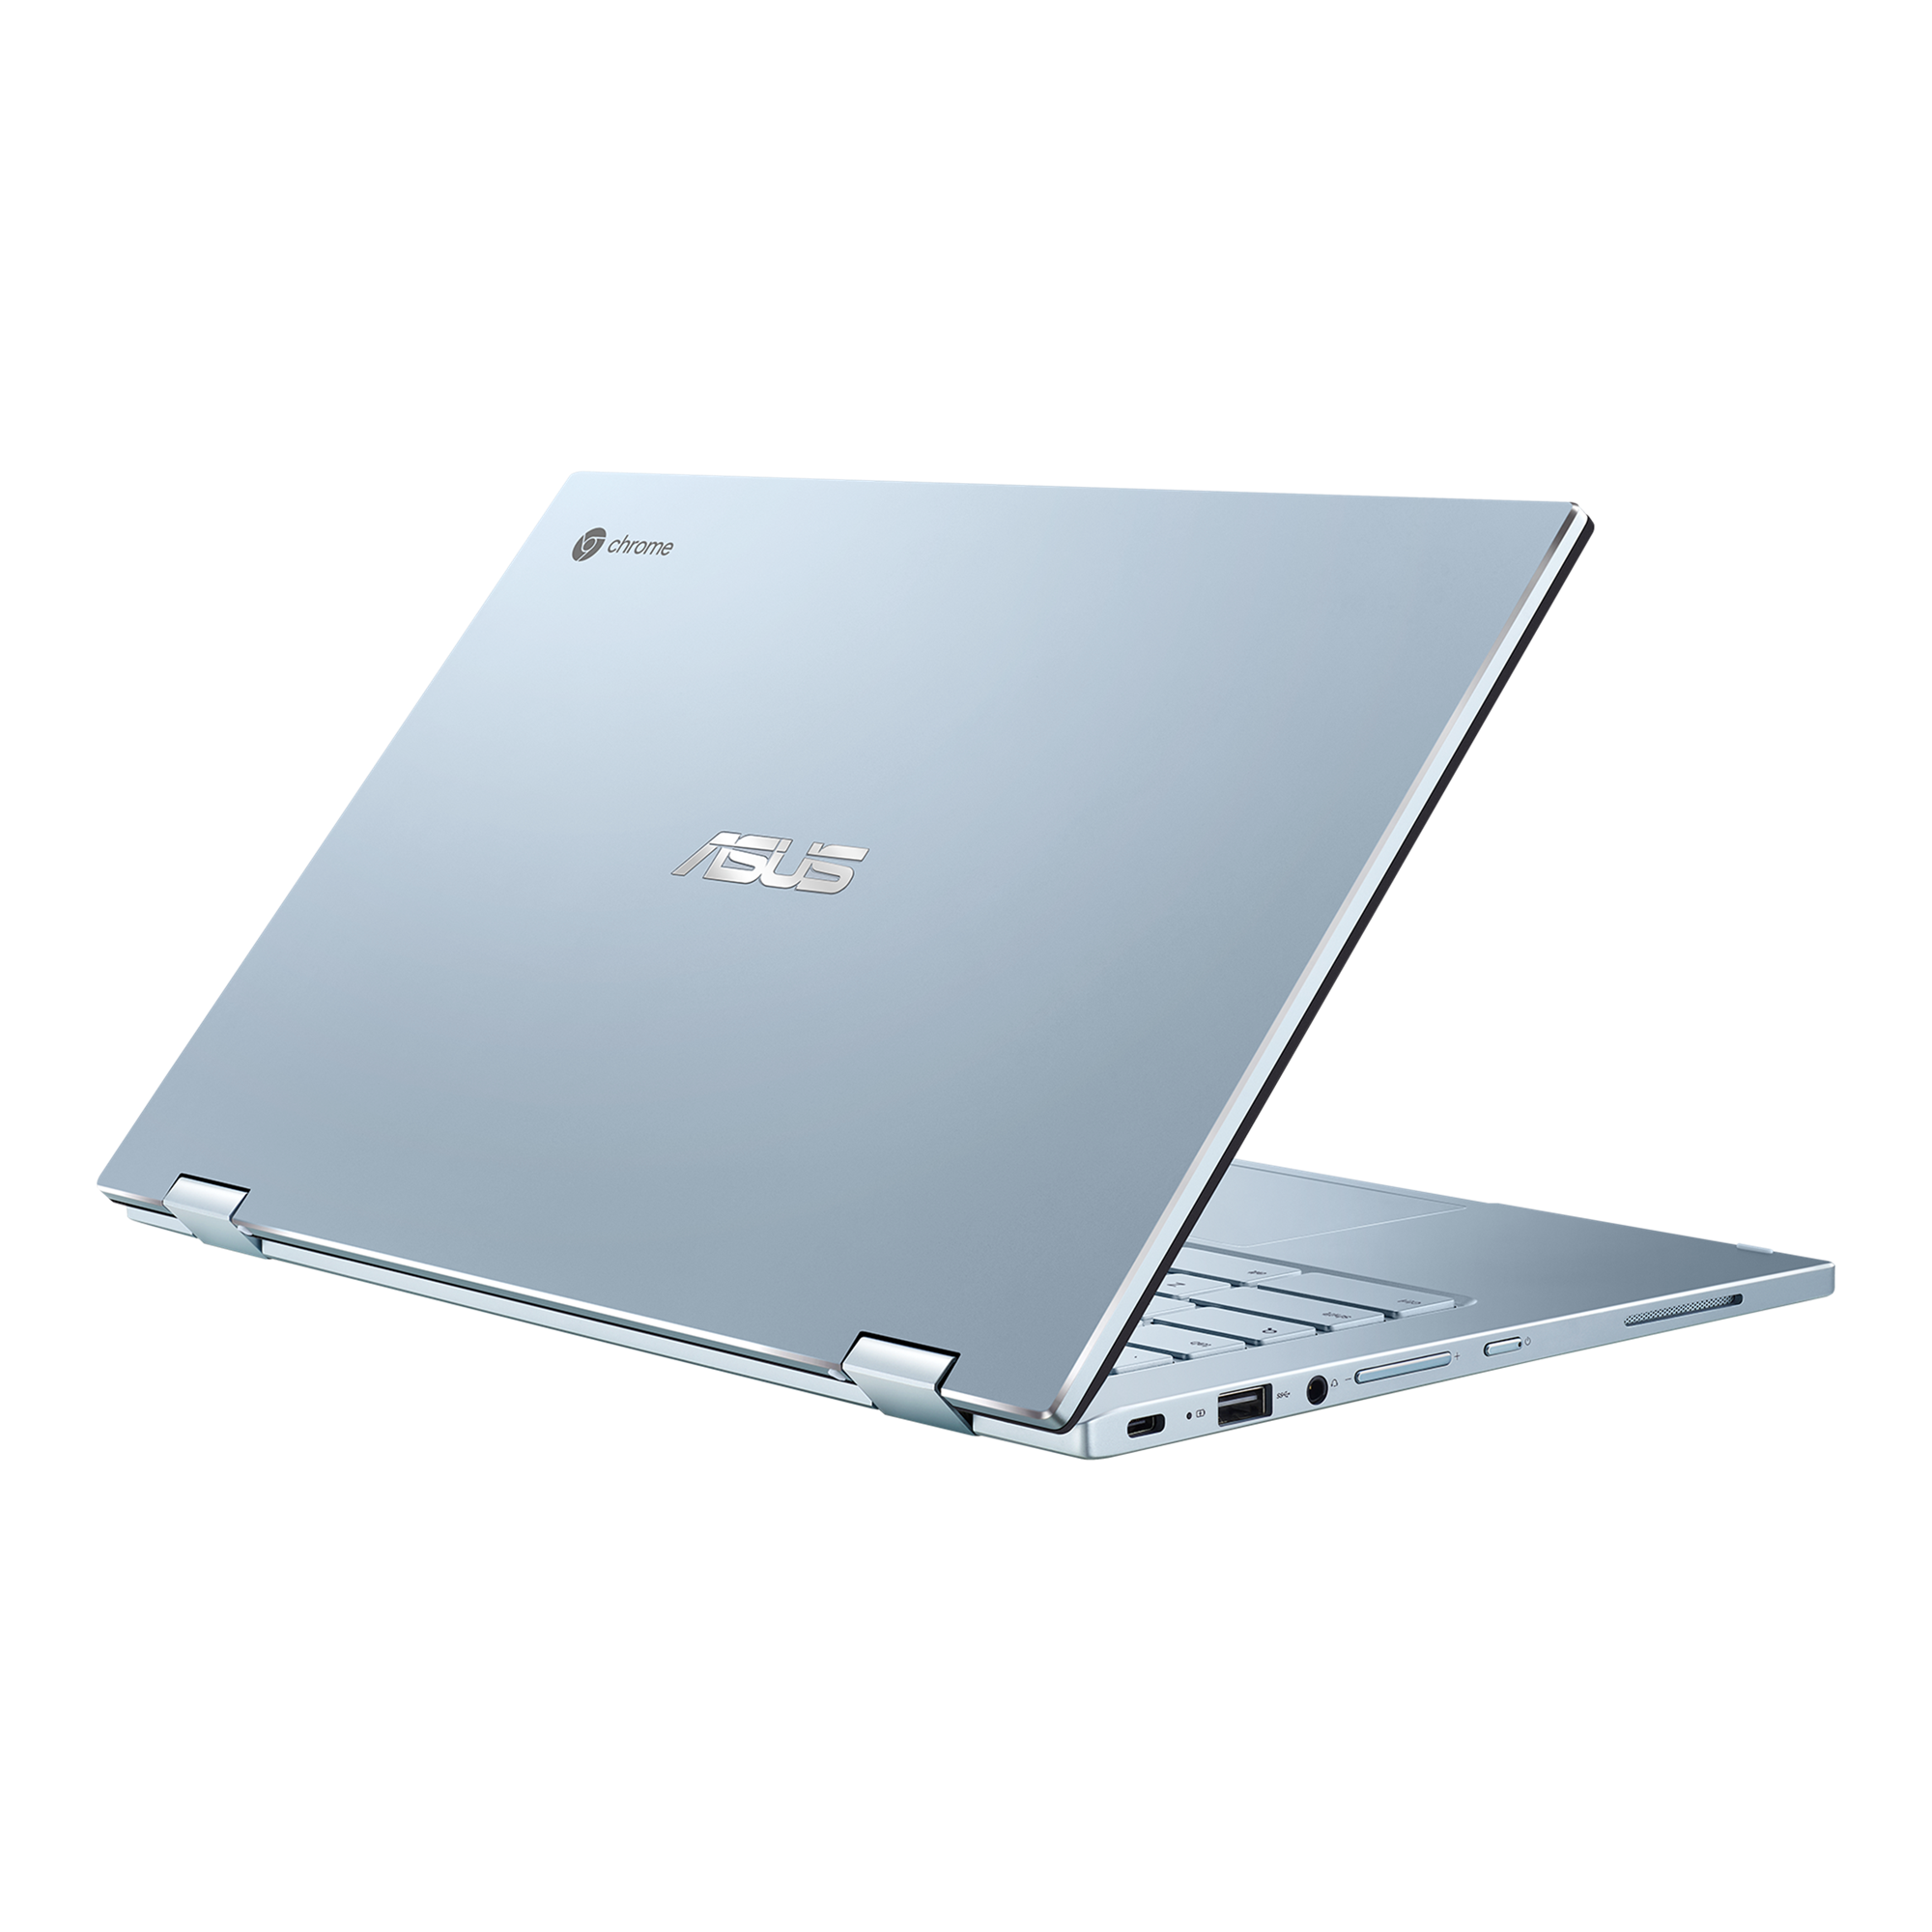 ASUS Chromebook Flip C433｜Laptops For Home｜ASUS Canada